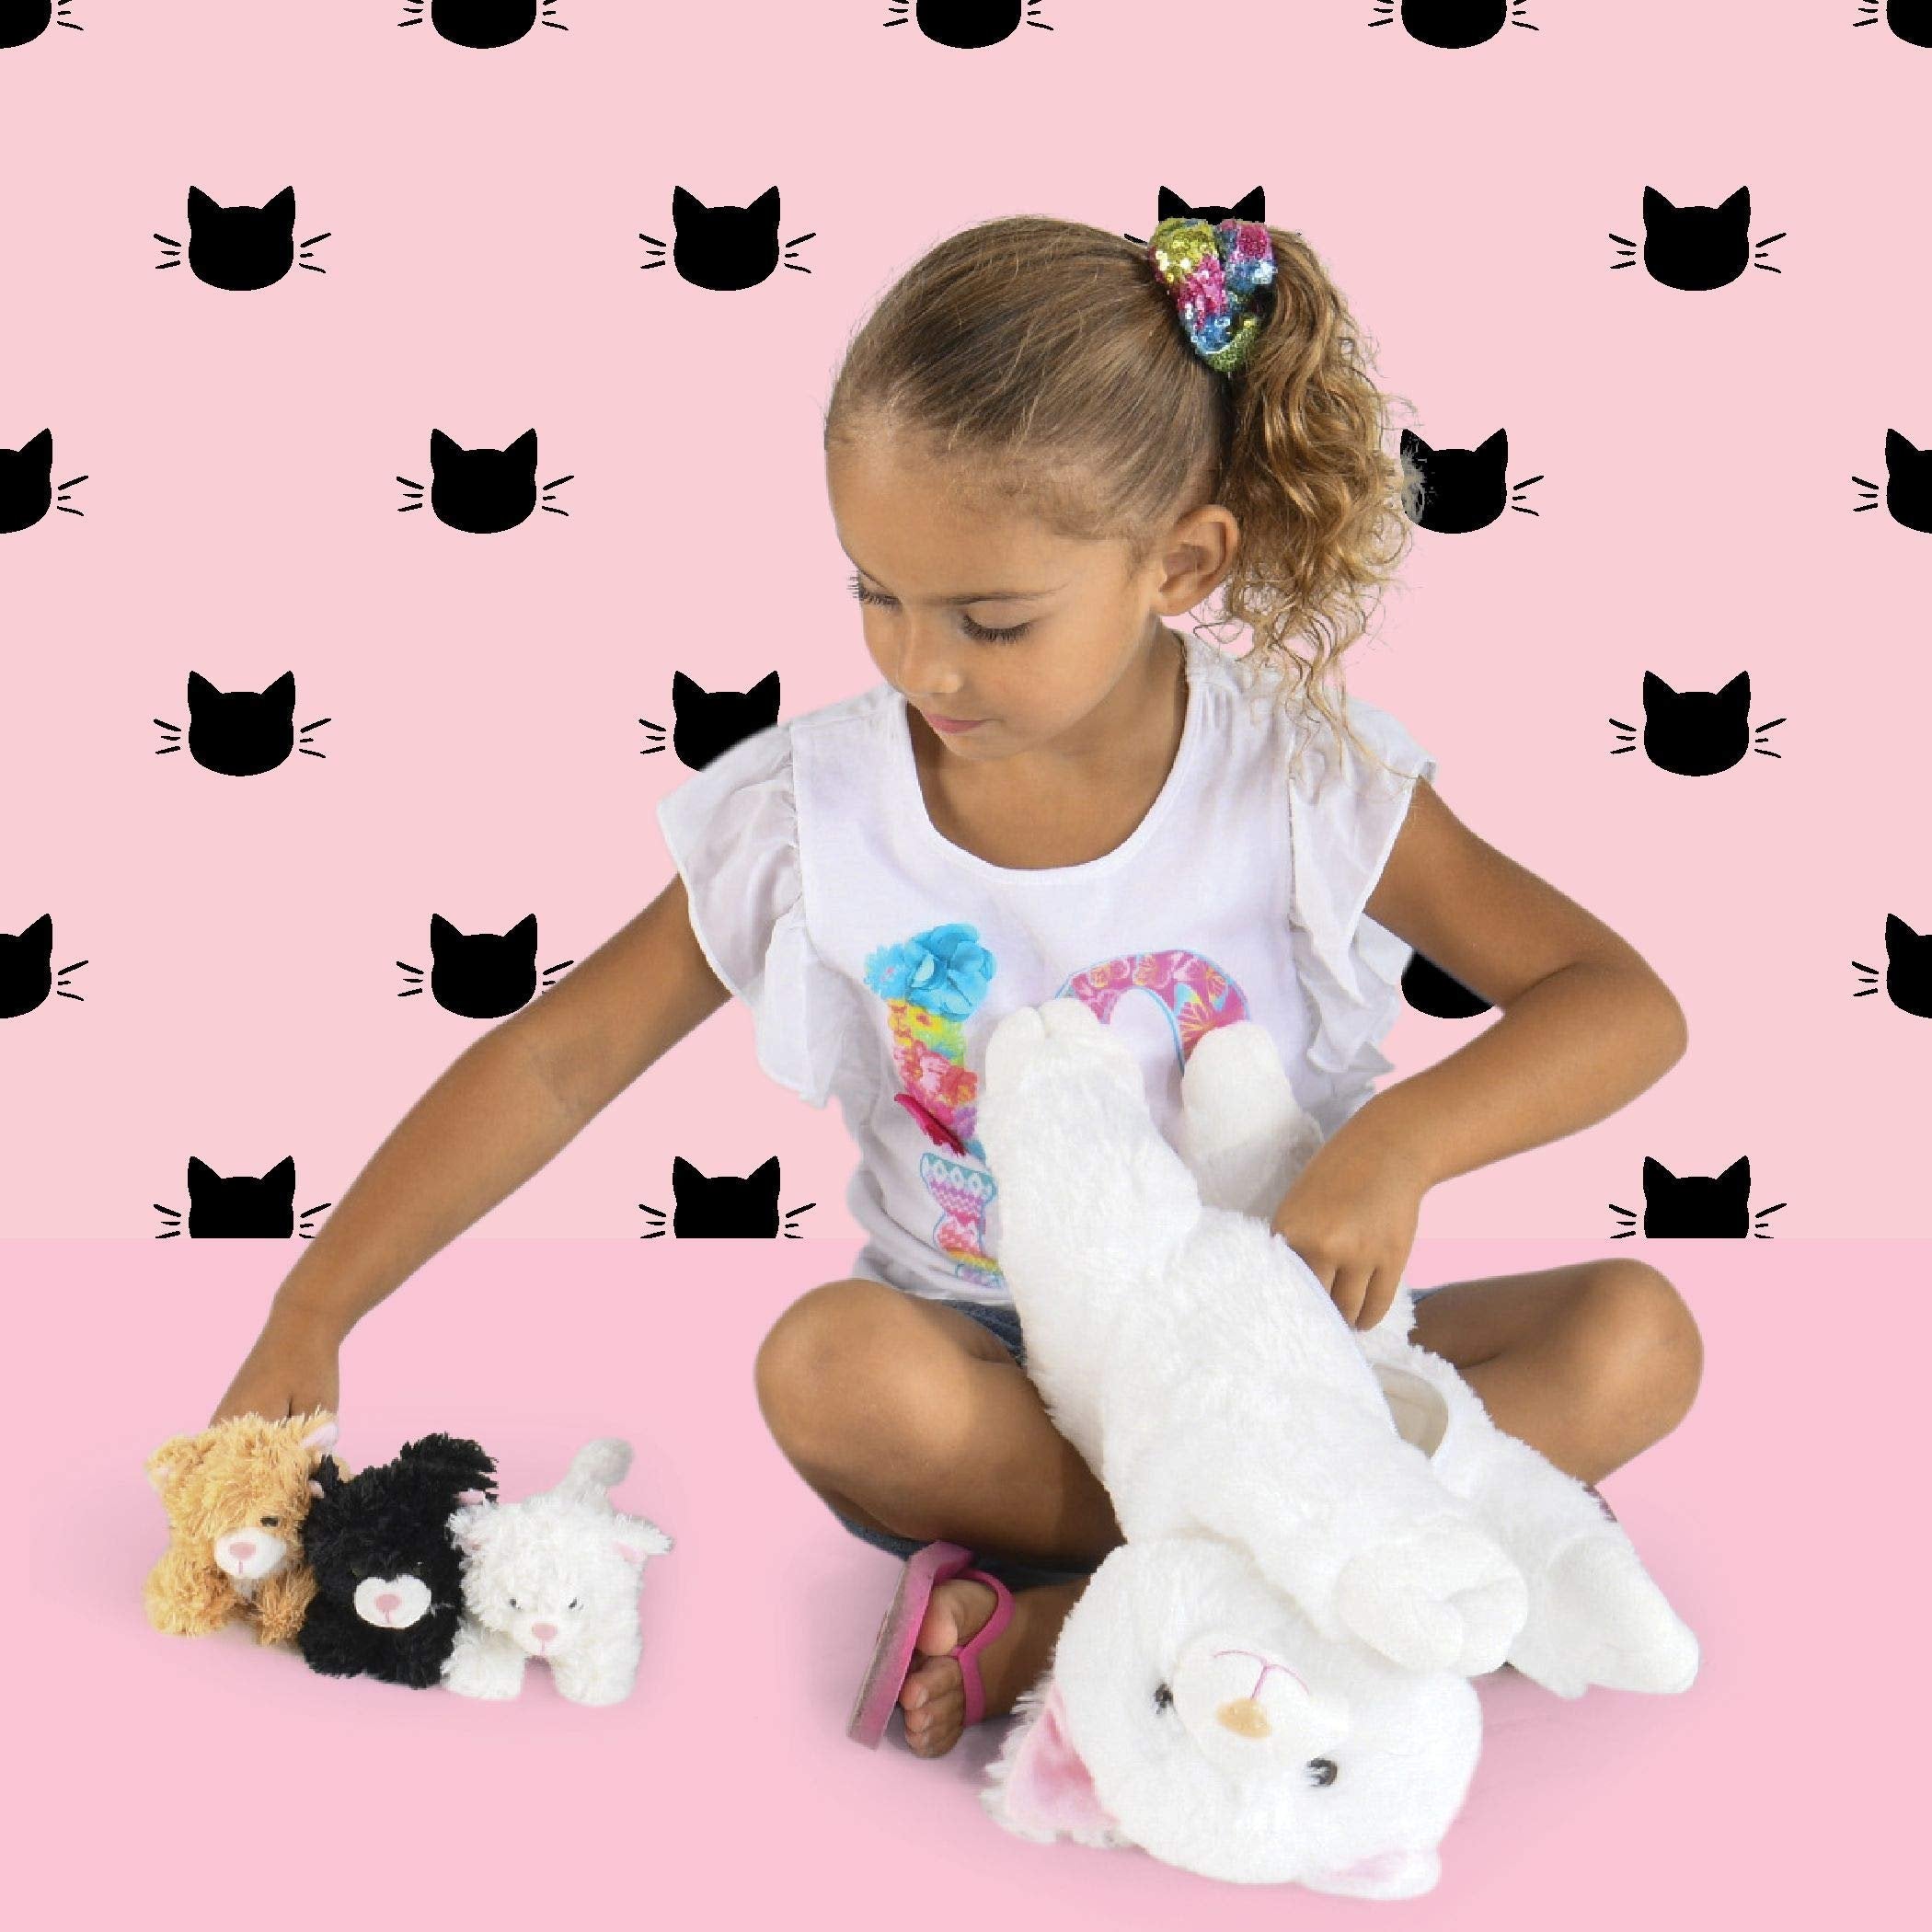 PREXTEX Plush Cat Toys Stuffed Animal w/ 3 Cats Baby Stuffed Animals - Big Cat Zippers 3 Little Plush Baby Kittens - Cat Plush Toys for Kids 3-5 - Cat Stuffed Animals & Kitten Toy -Gift for Cat Lovers